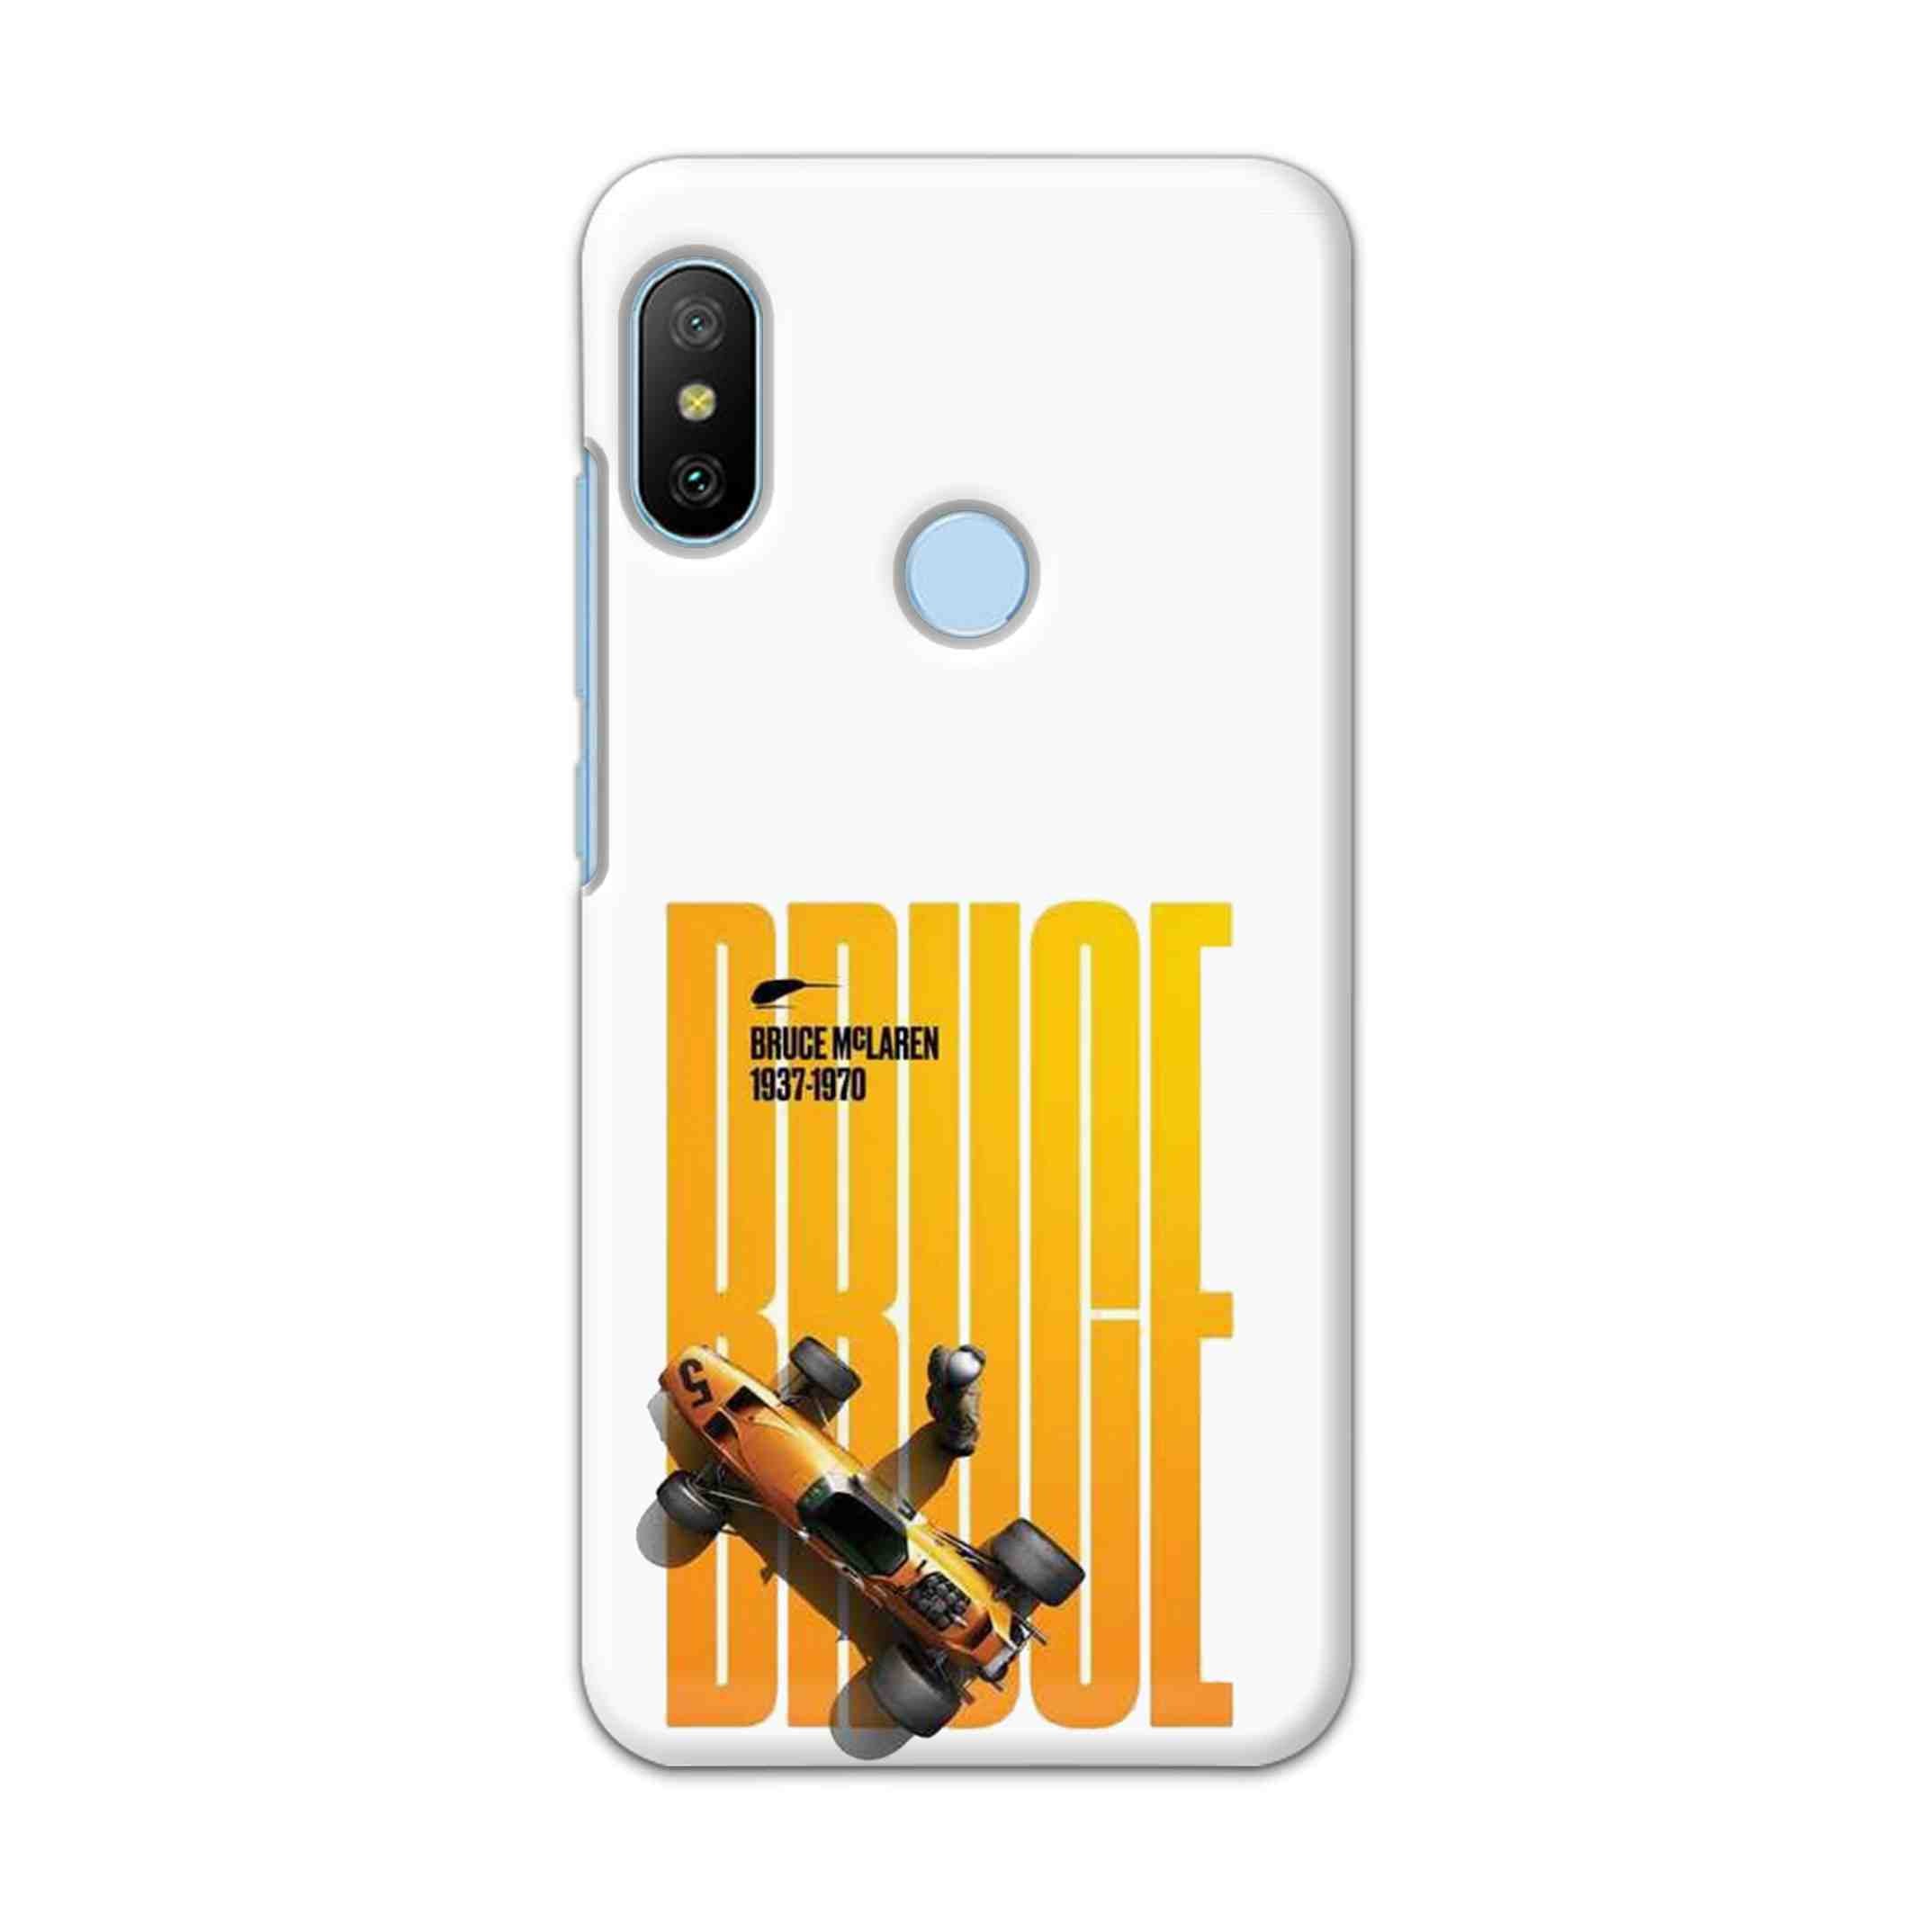 Buy Mc Laren Hard Back Mobile Phone Case/Cover For Xiaomi Redmi 6 Pro Online